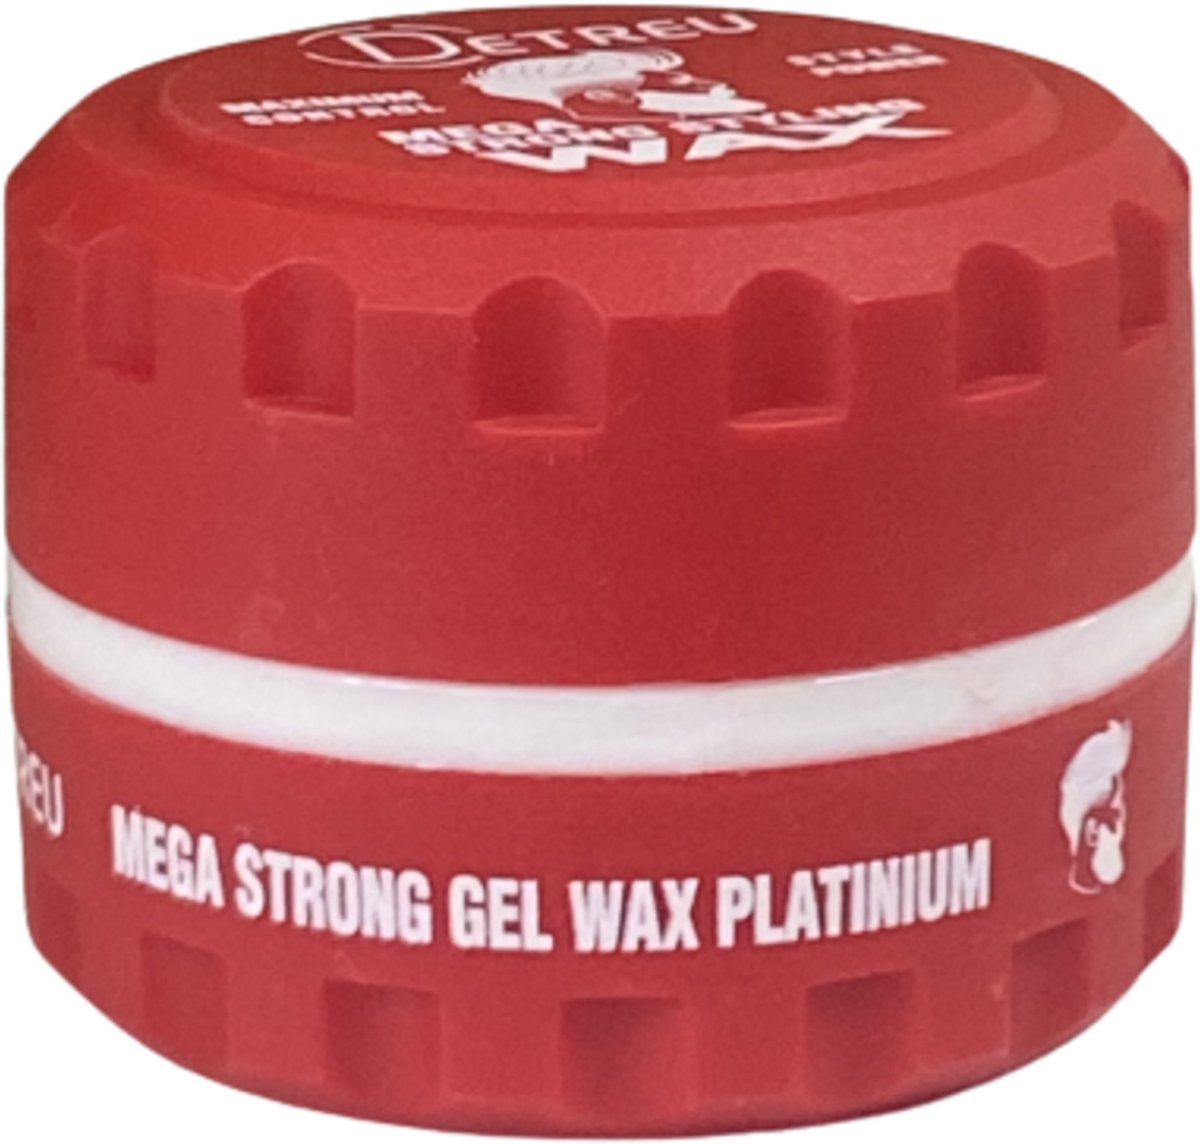 Detreu Mega Strong Styling Wax 140 ml